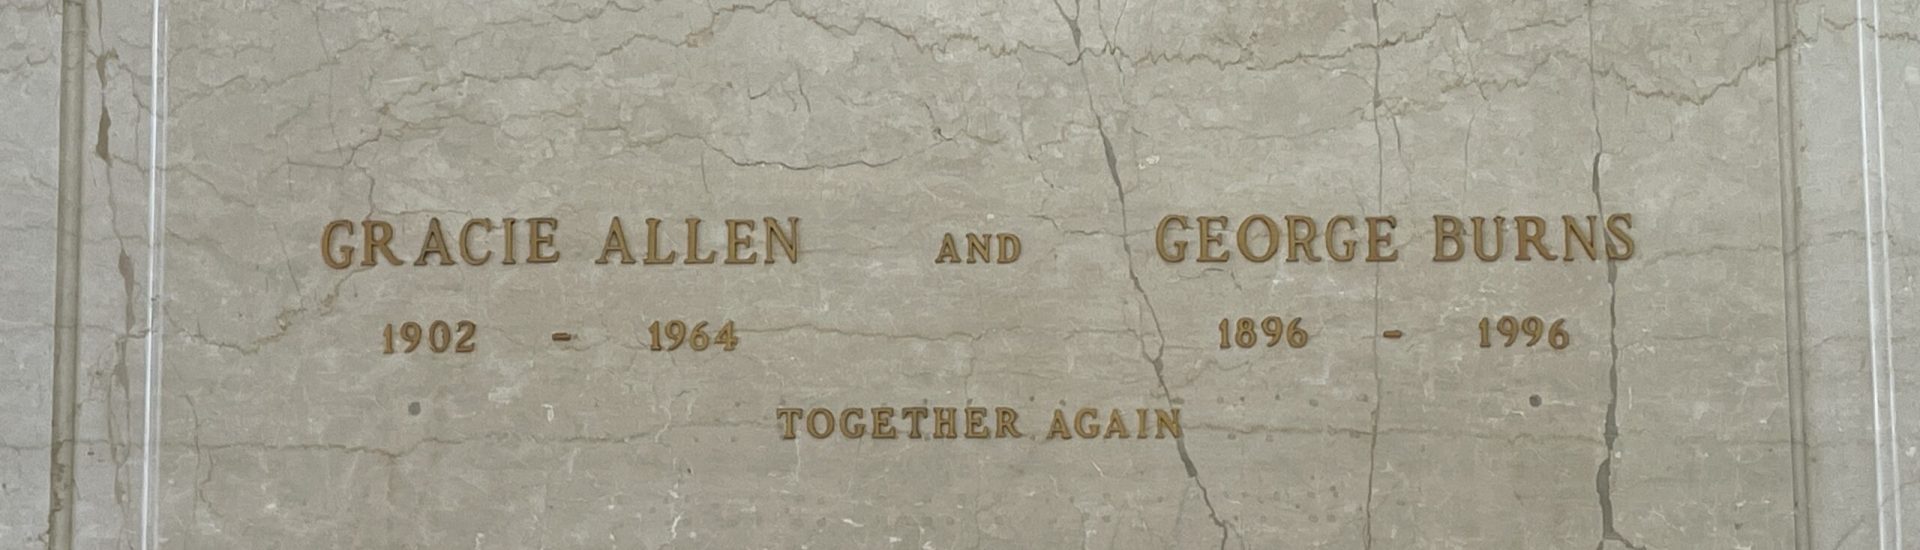 Gracie Allen and George Burns